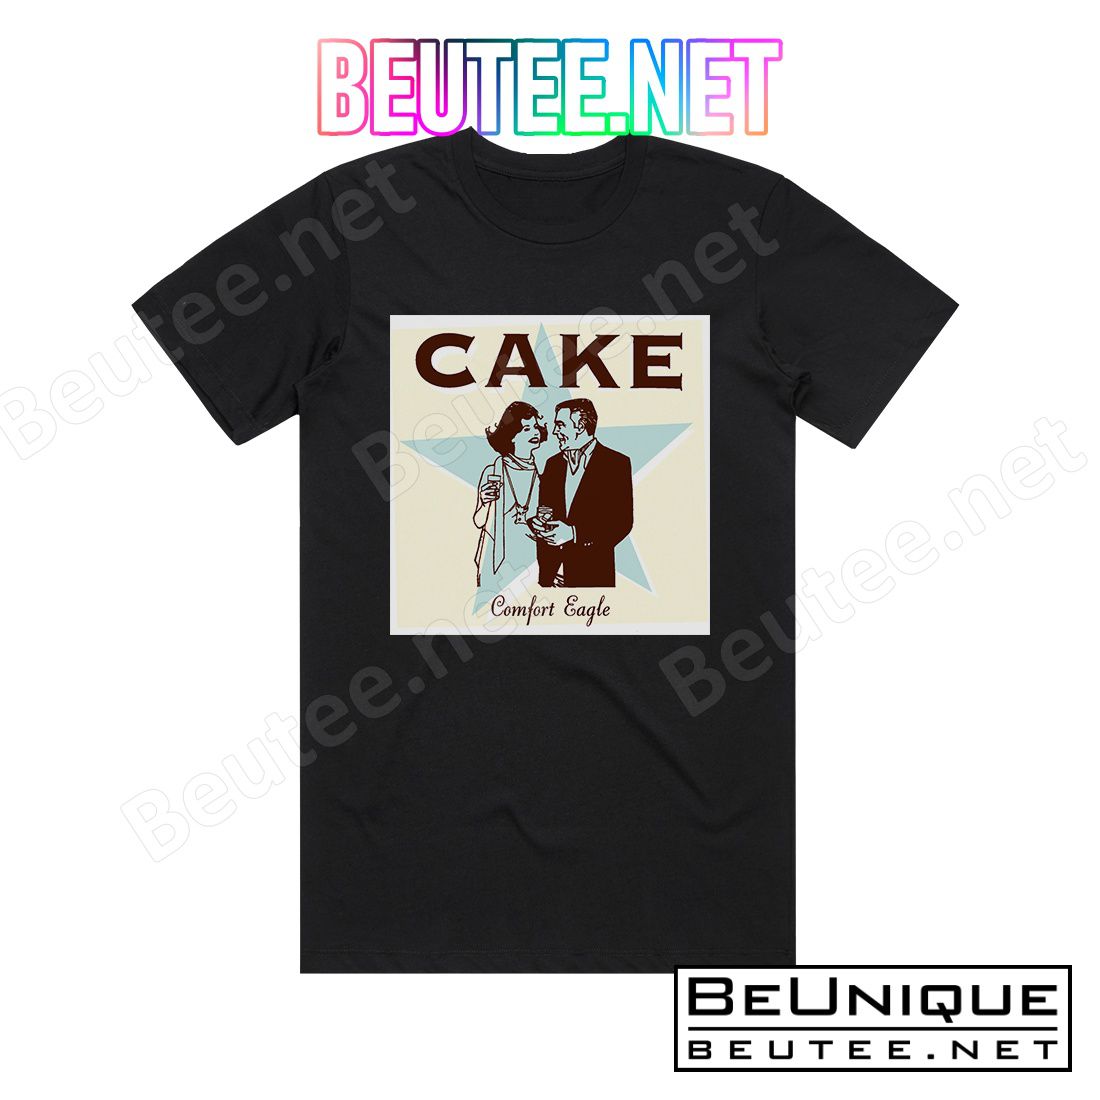 Cake Comfort Eagle 2 Album Cover T-Shirt